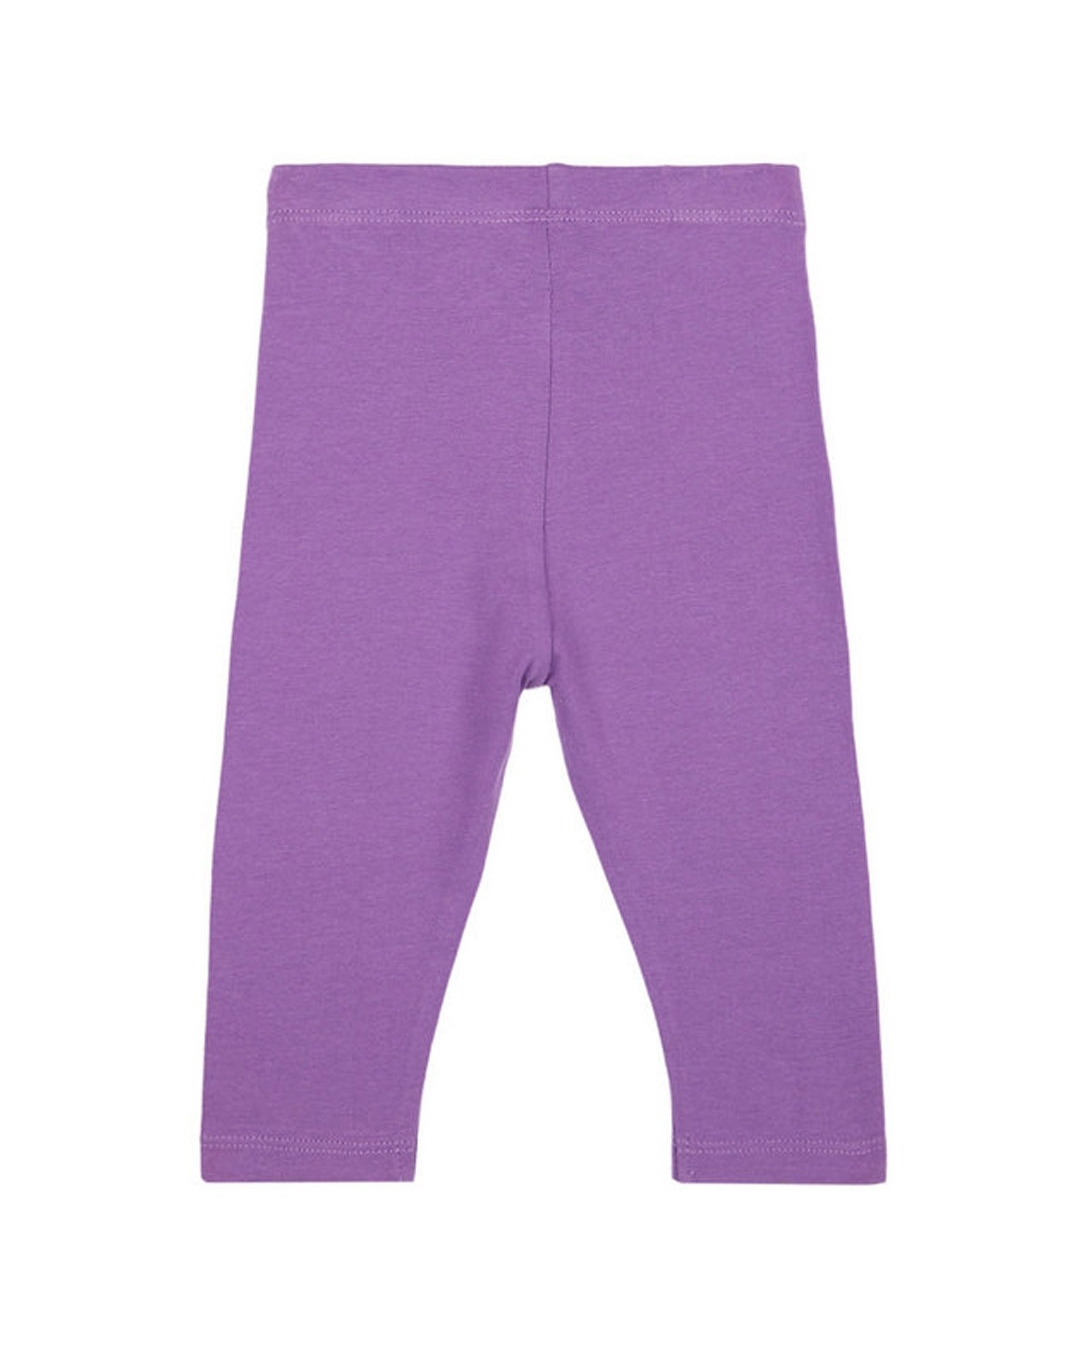 Buy Girls' Leggings Purple Online